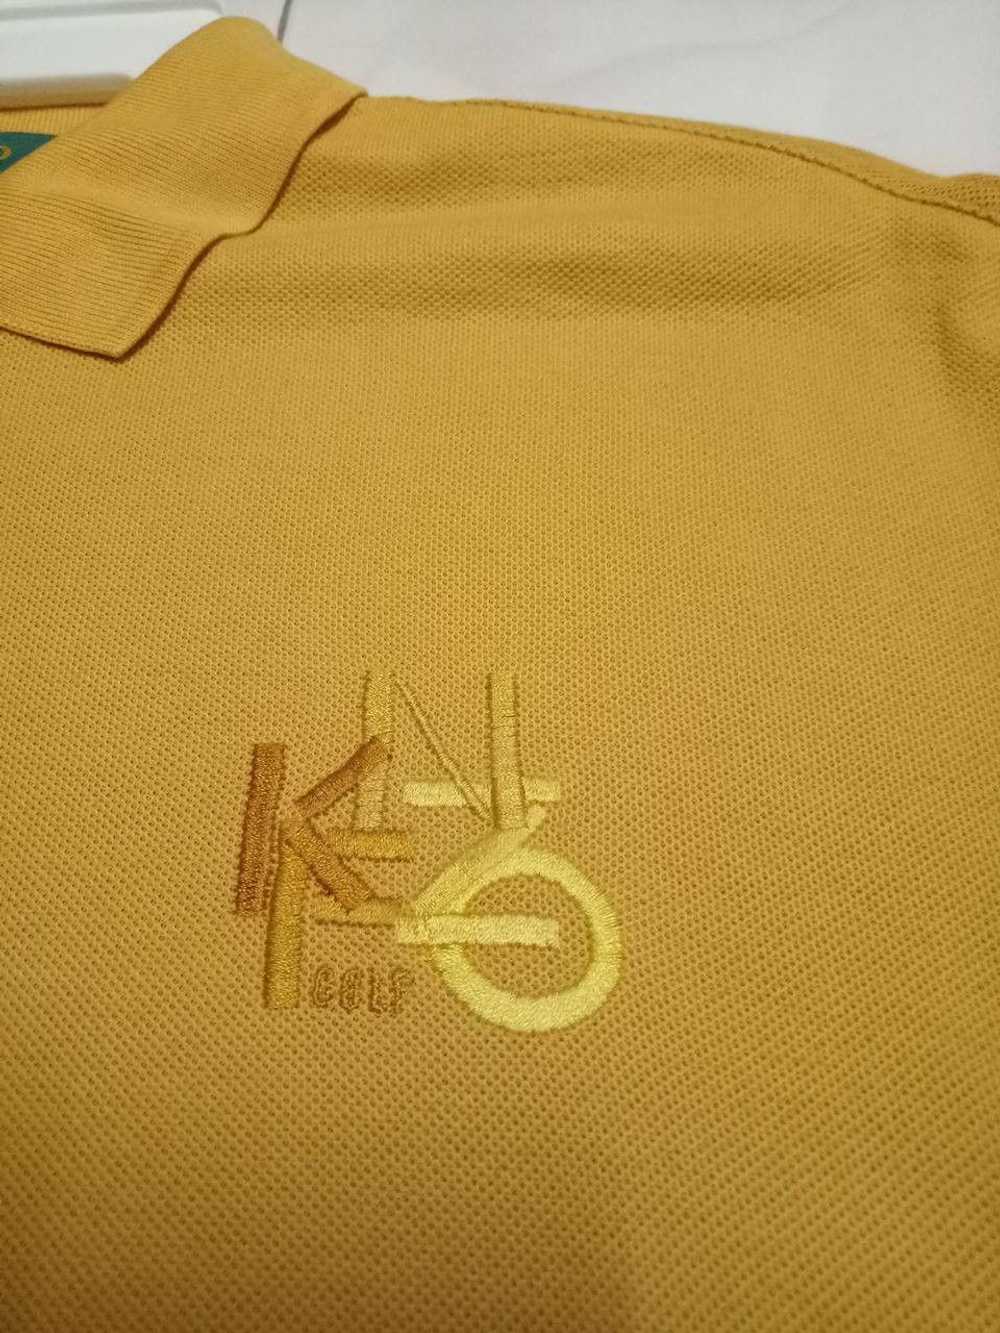 Kenzo KENZO GOLF Polo Ringer Short Sleeve Shirt - image 4